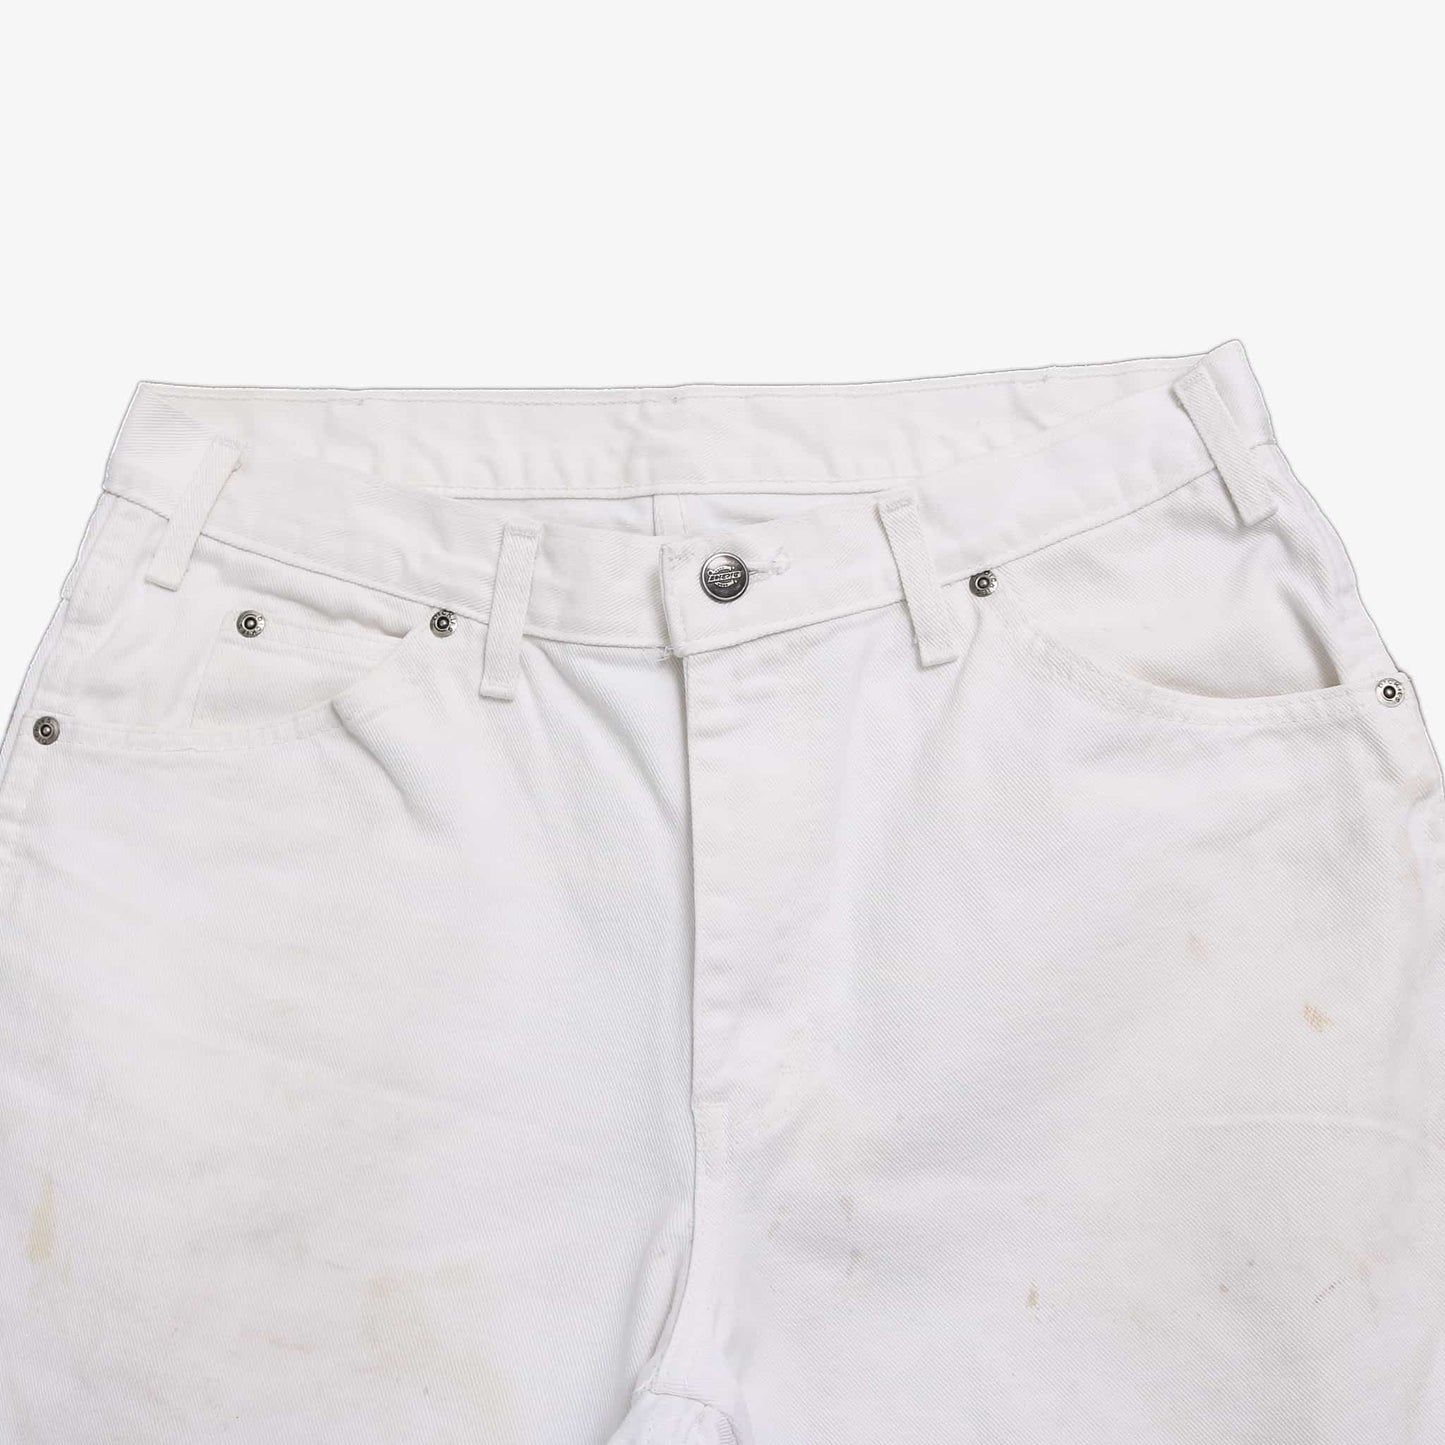 Vintage Carpenter Pants - White - 34/32 - American Madness